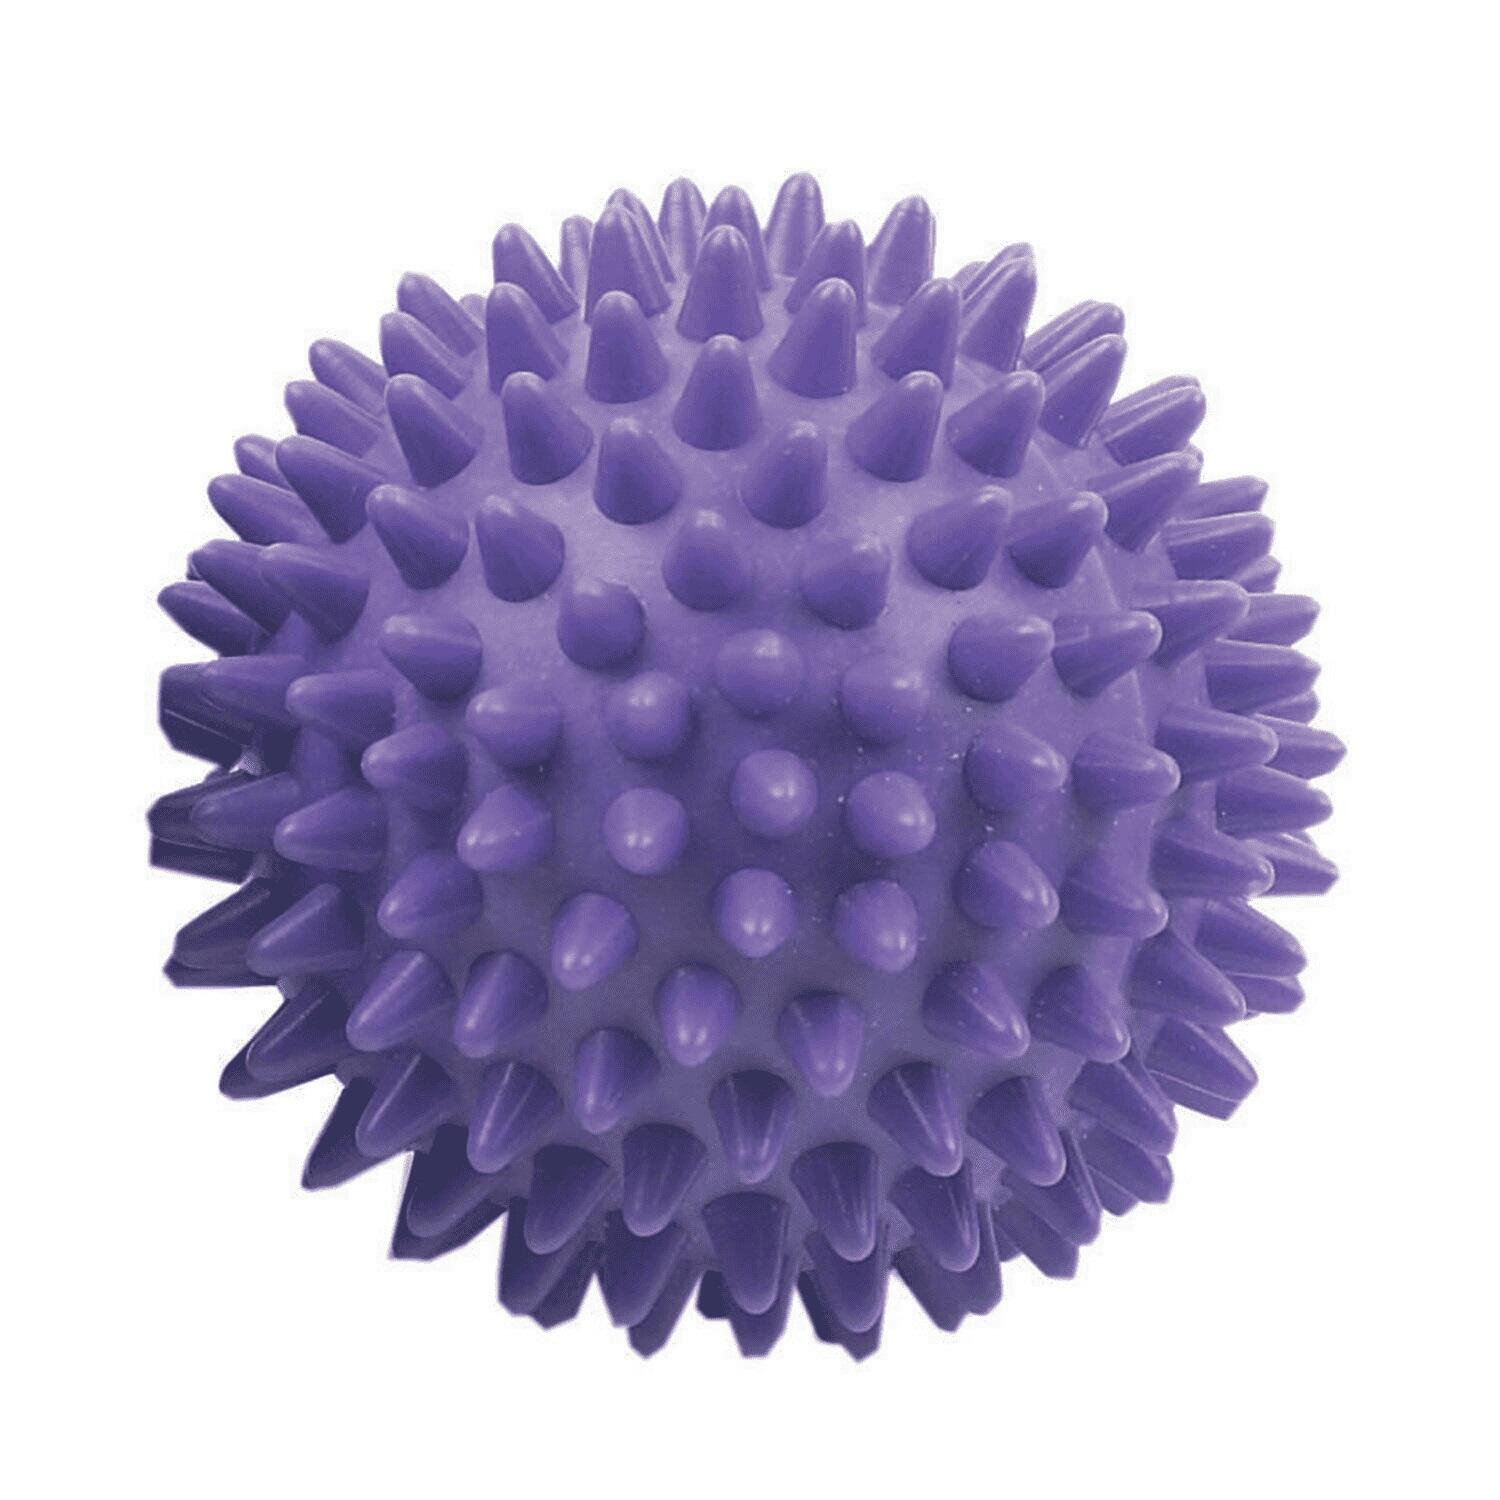 FITNESS-MAD Massage Ball (Purple)